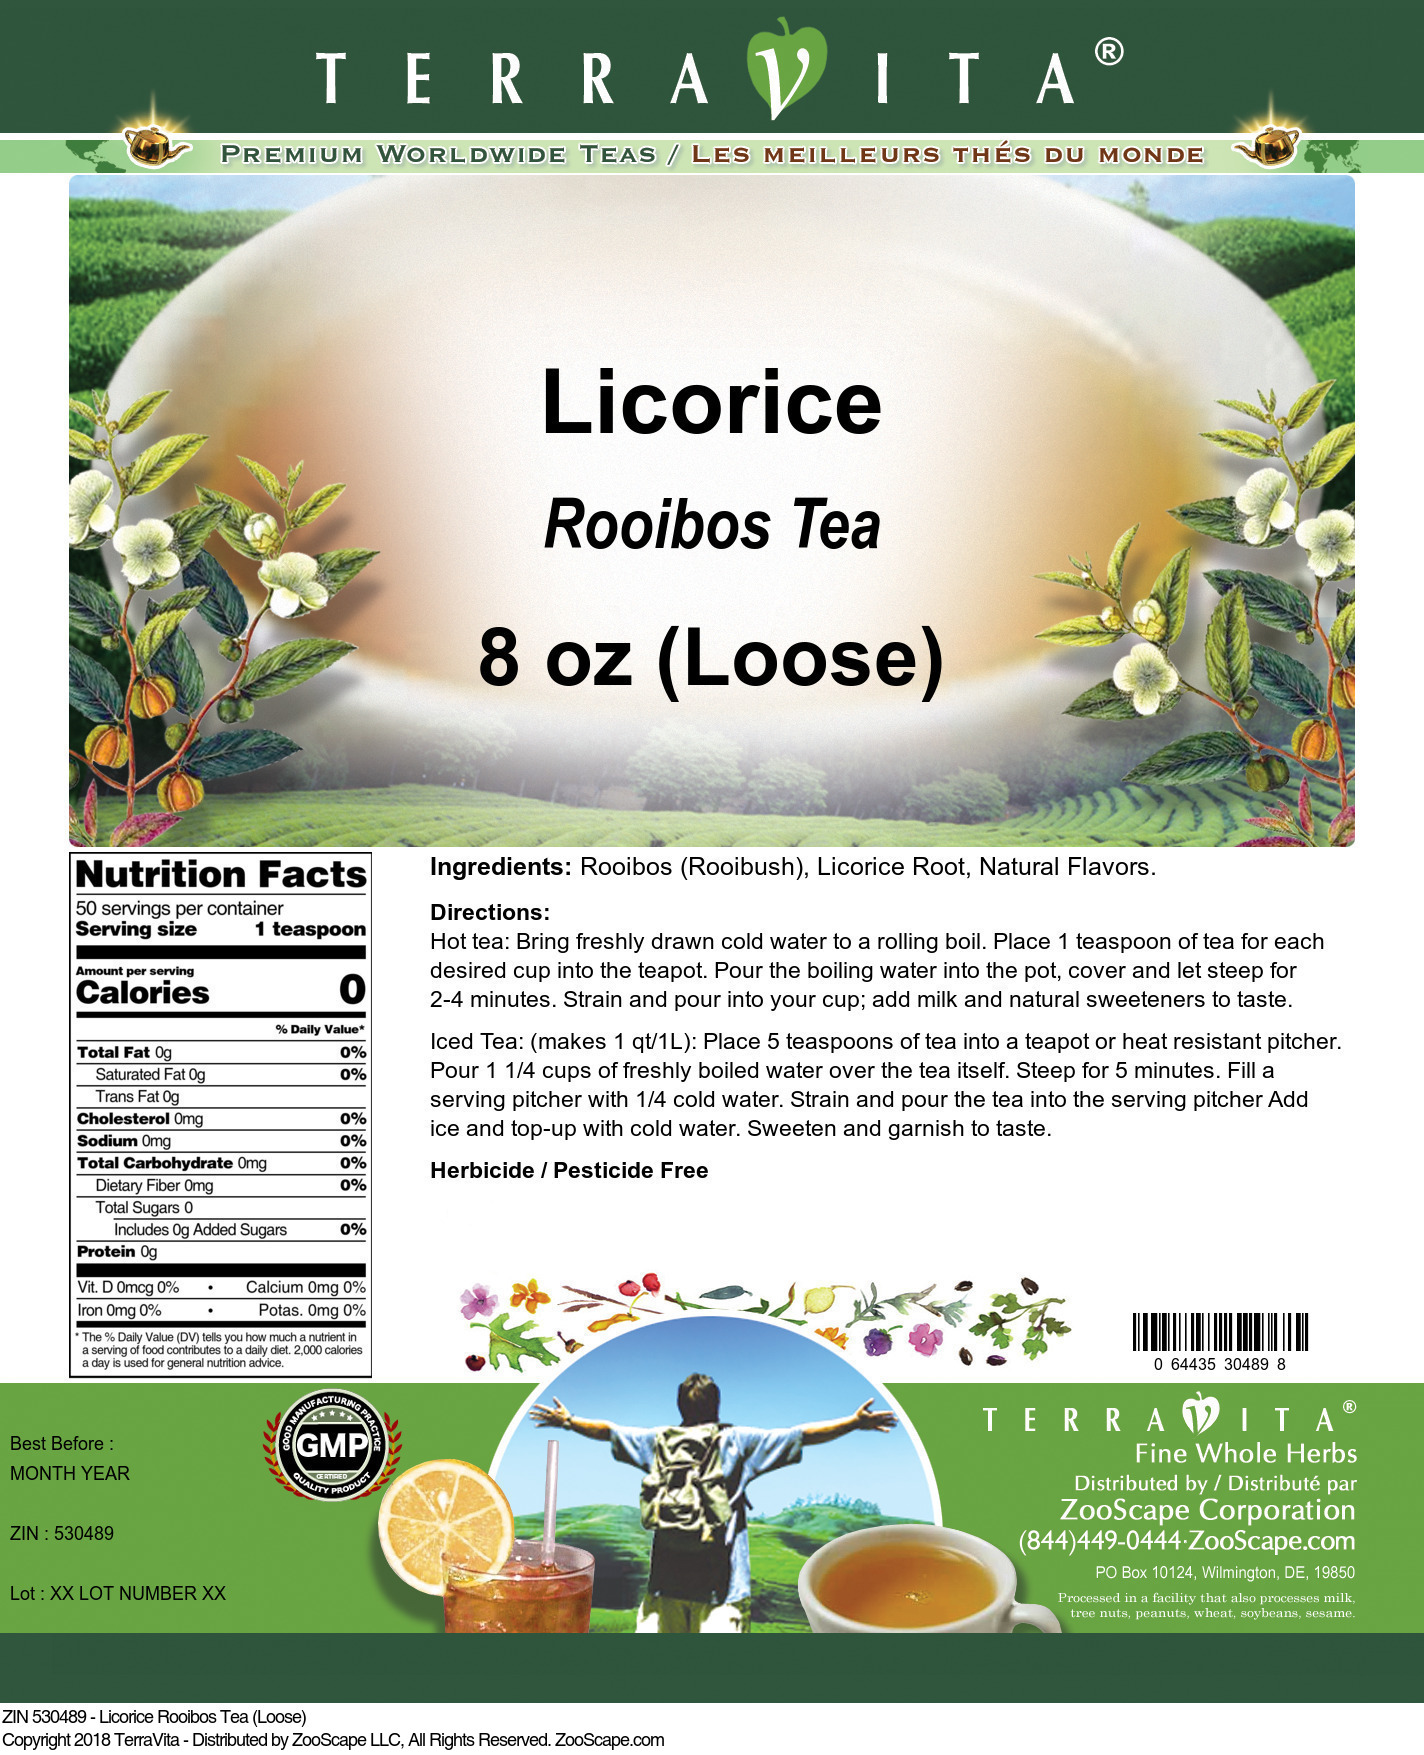 Licorice Rooibos Tea (Loose) - Label